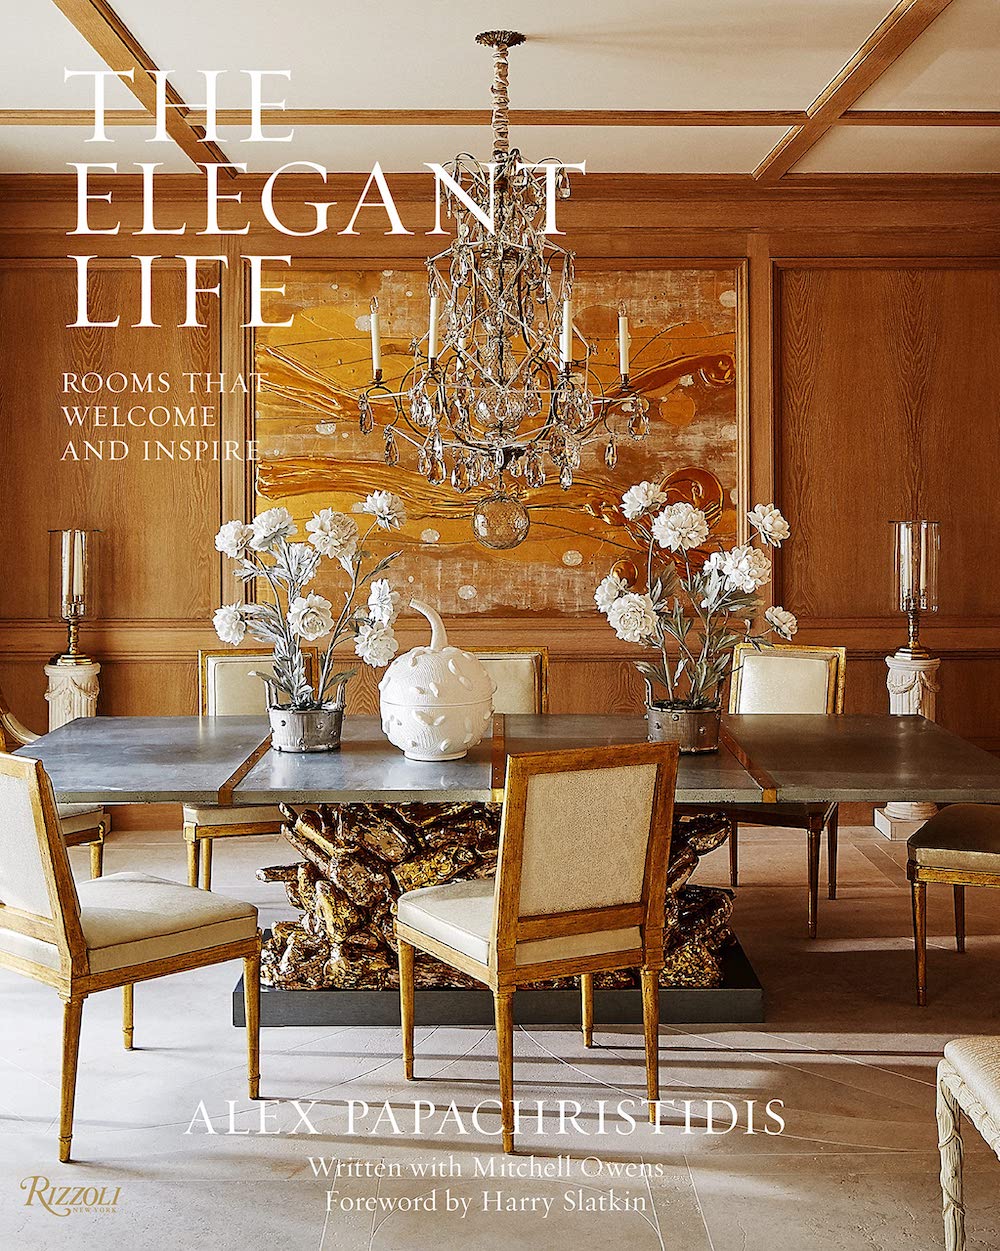 The Elegant Life by Alex Papachristidis